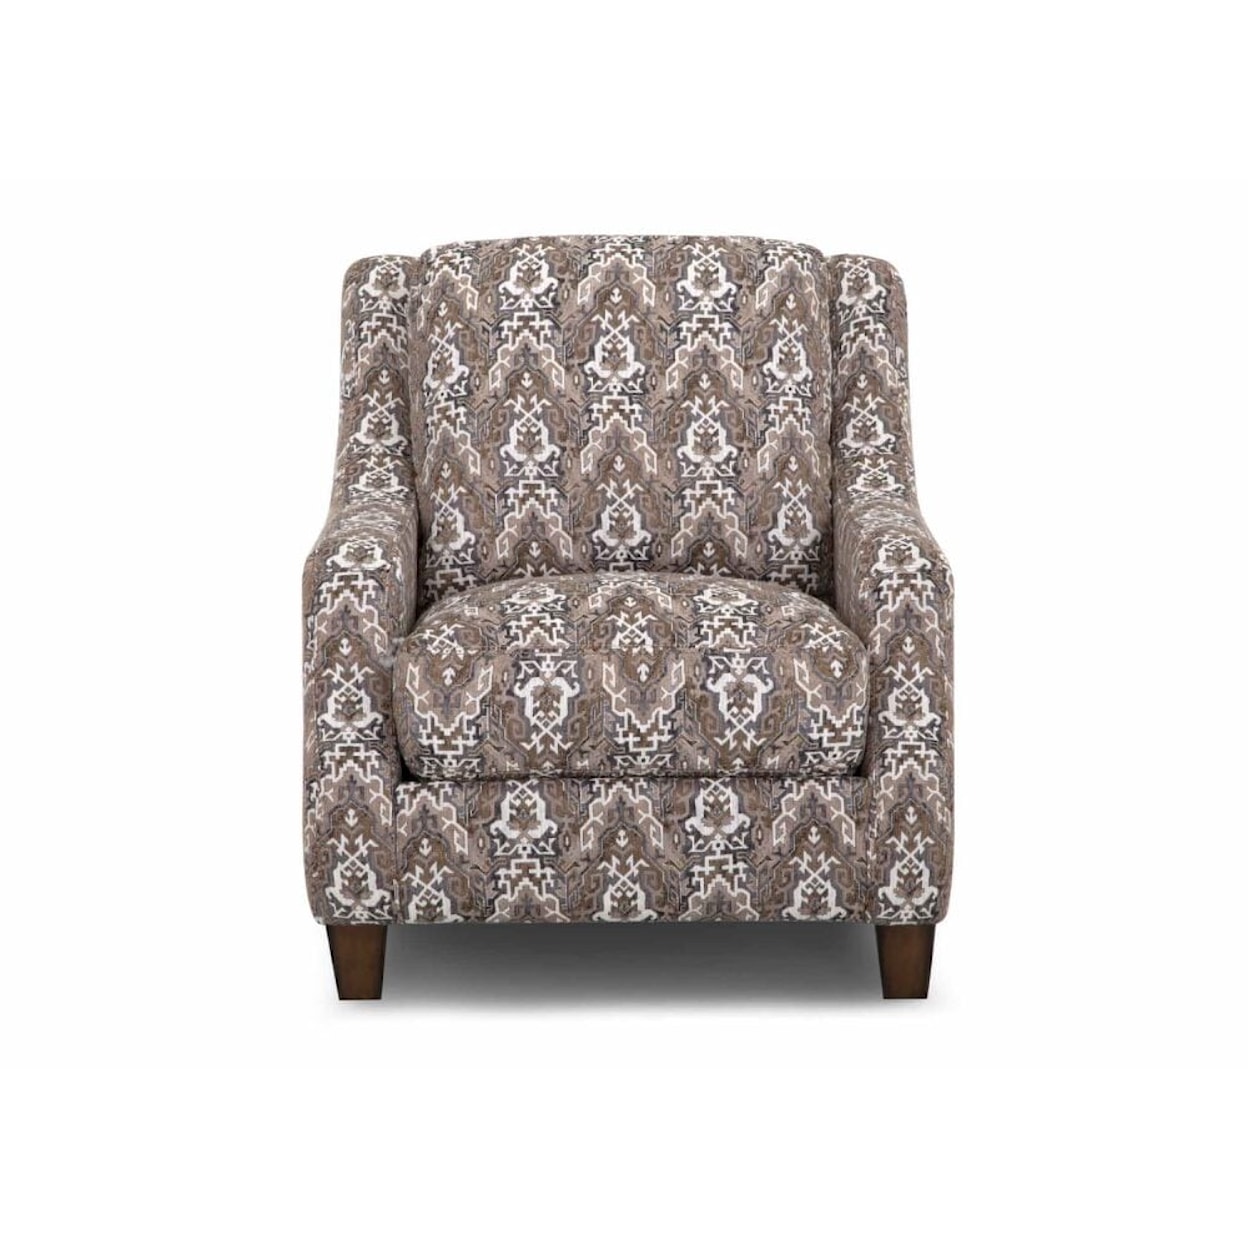 Franklin Tula Chair & Ottoman Set